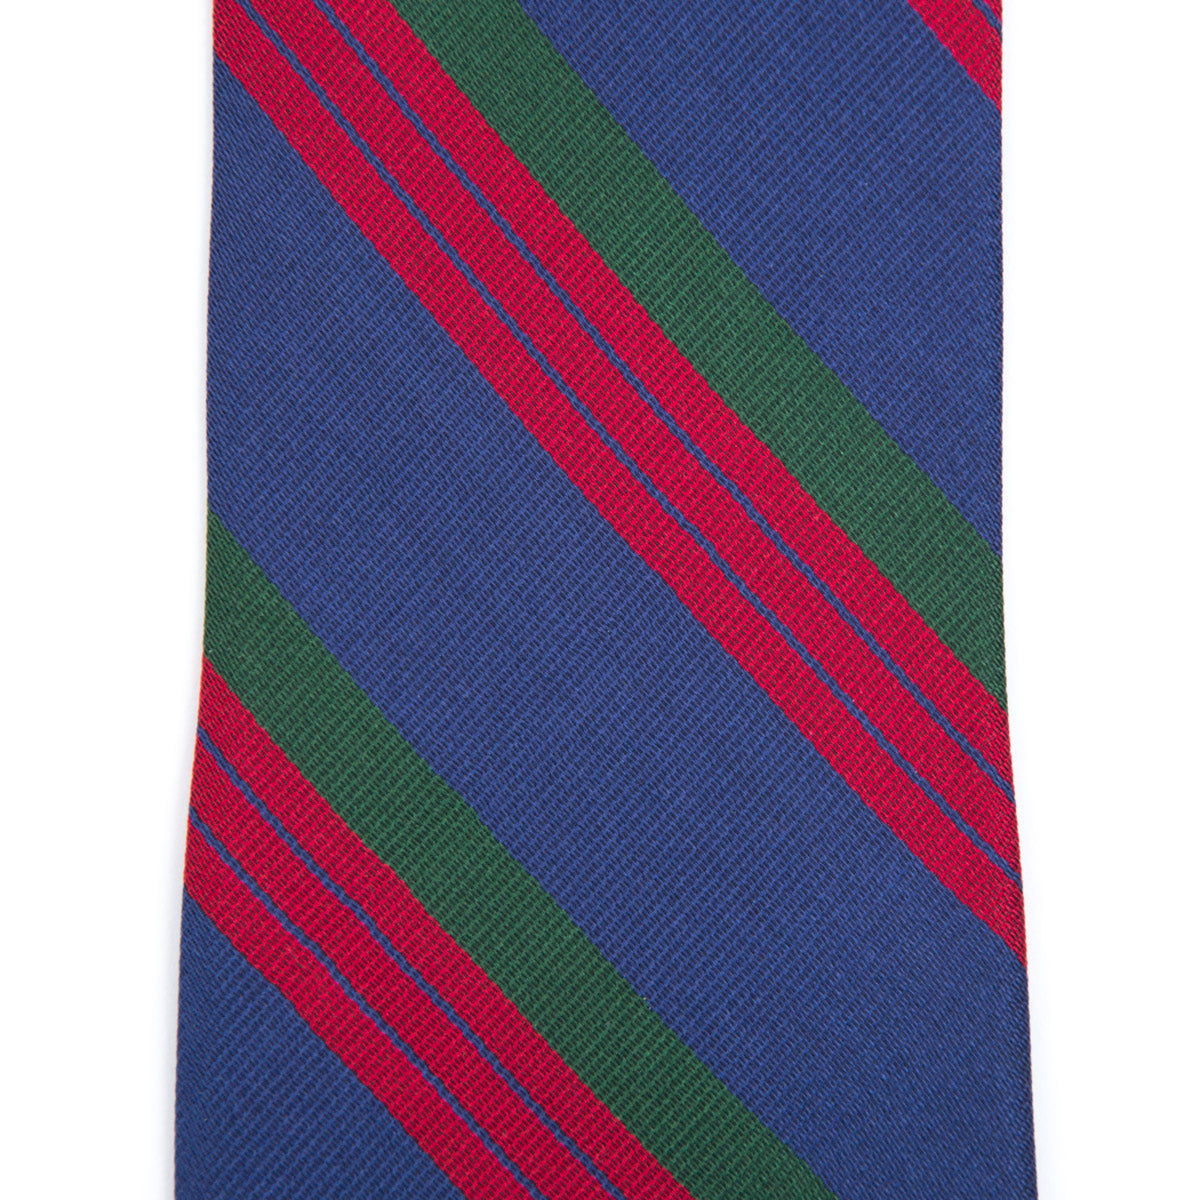 Navy blue striped tie